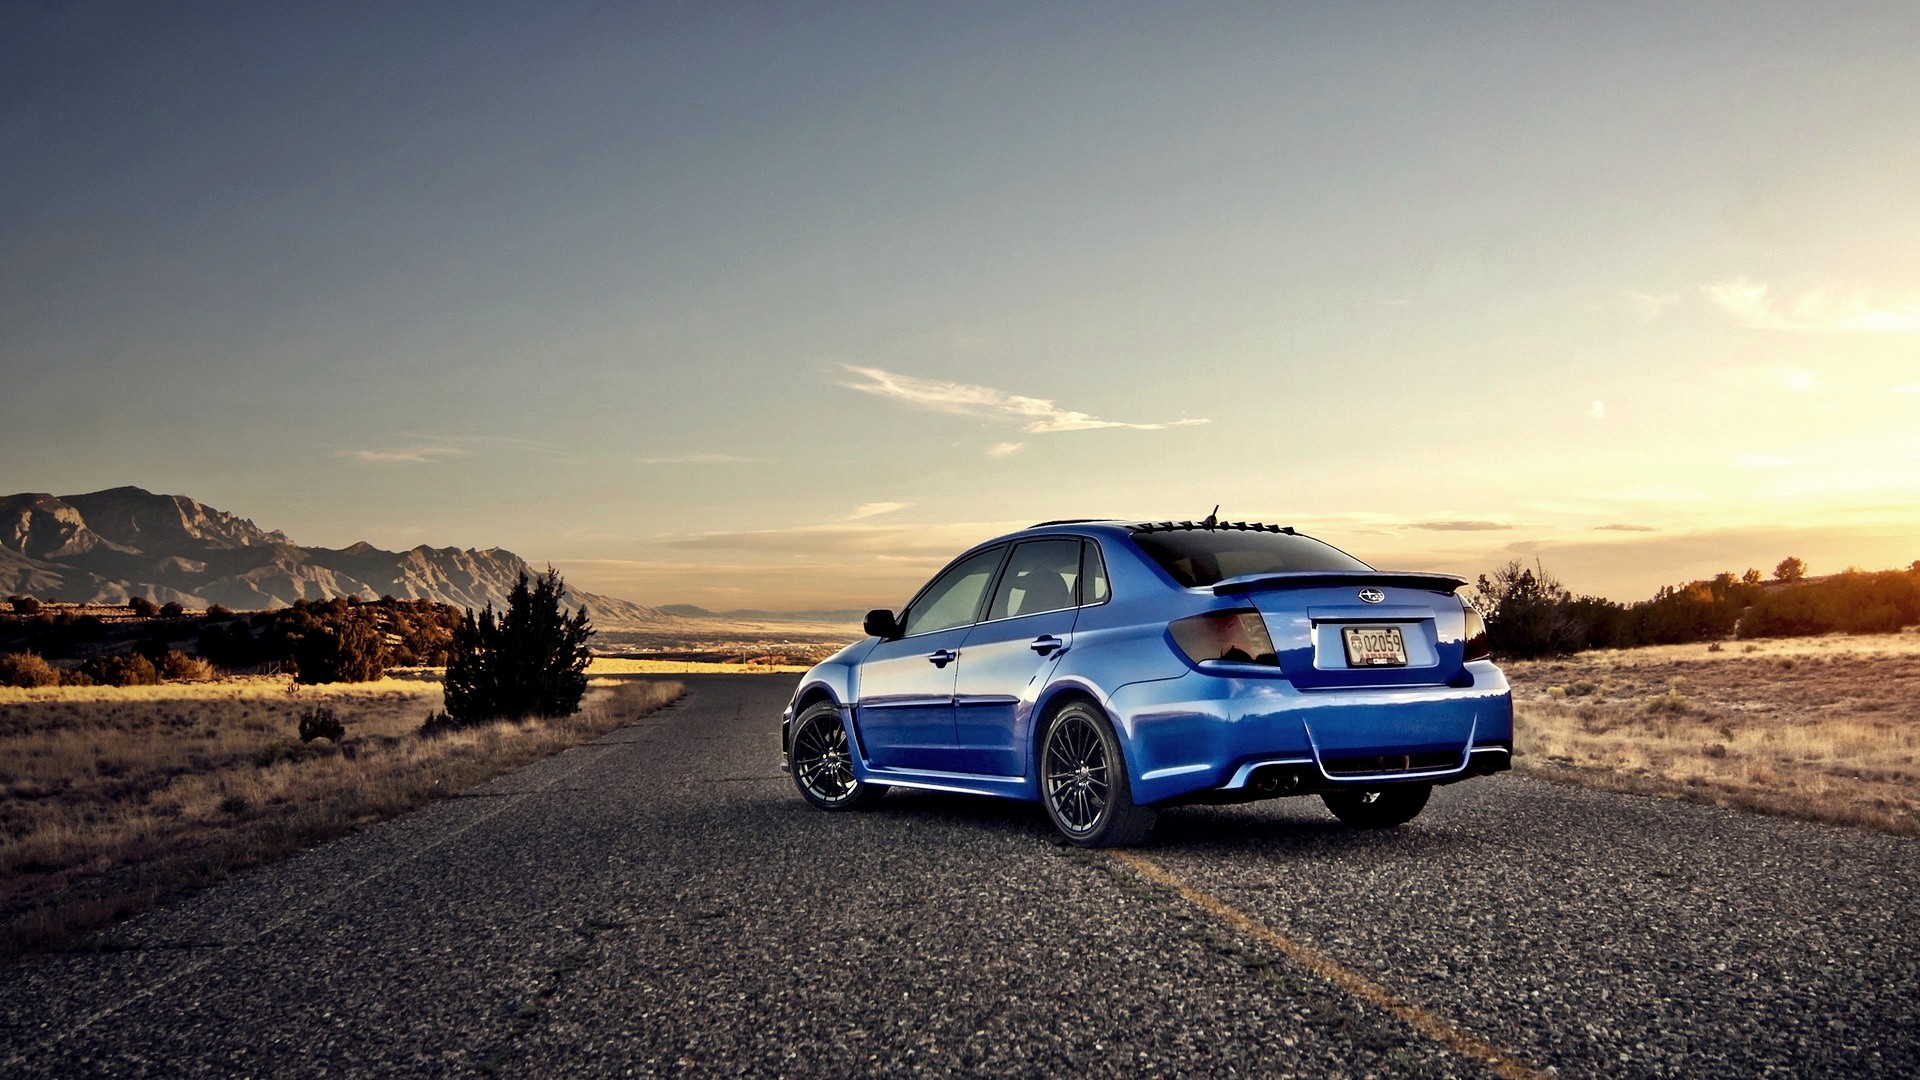 Subaru Impreza Wrx Sti Automobile Wallpaper Background